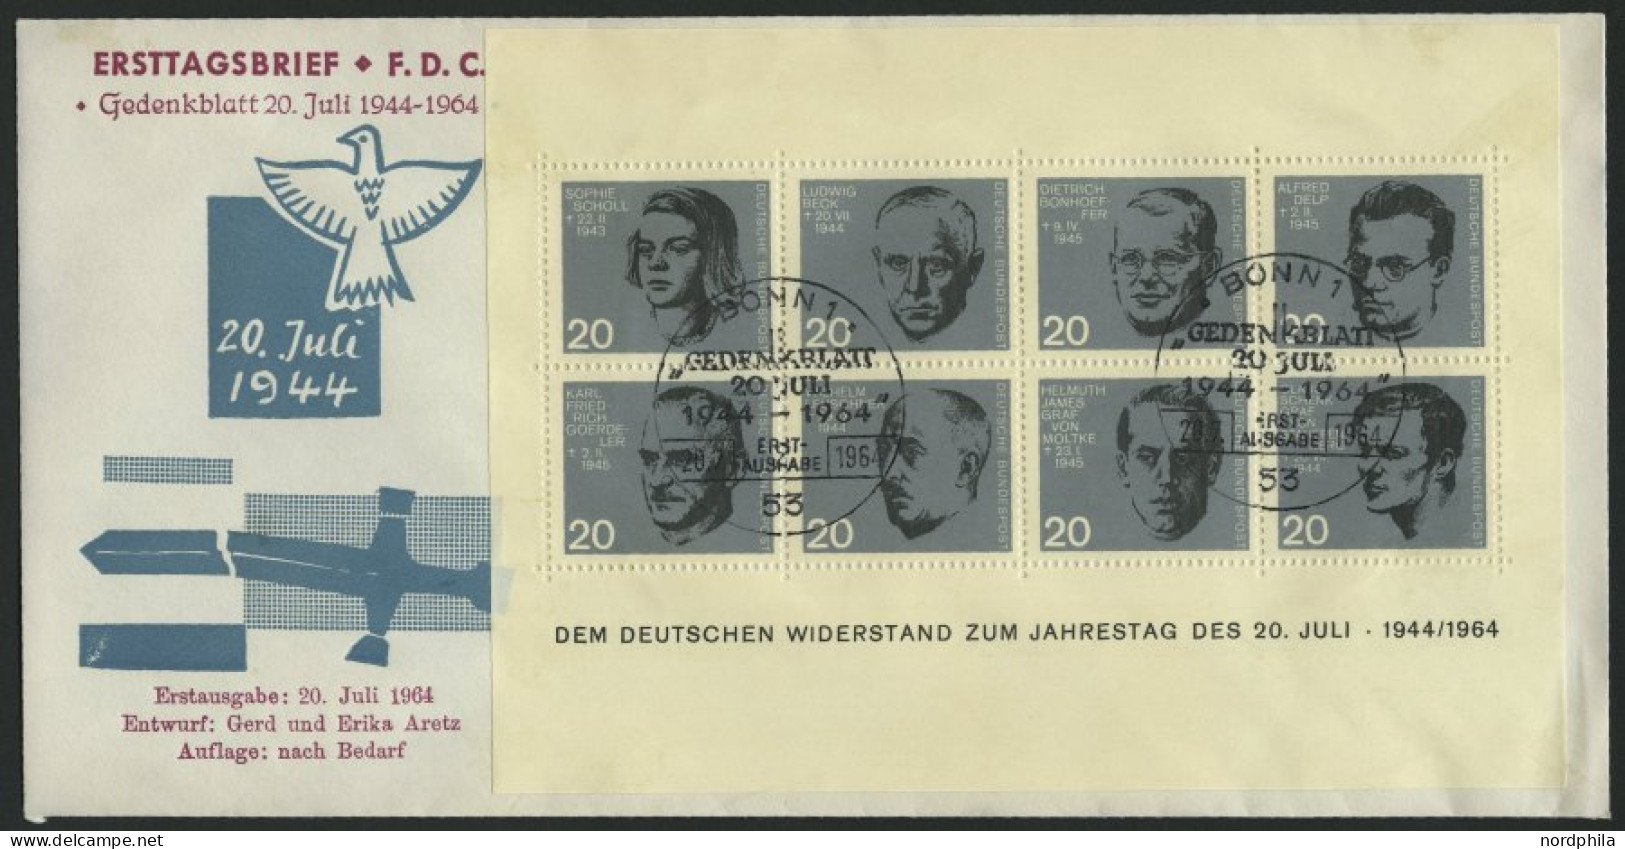 BUNDESREPUBLIK Bl. 3 BRIEF, 1964, Block 20. Juli Auf FDC, Pracht, Mi. 100.- - Covers & Documents